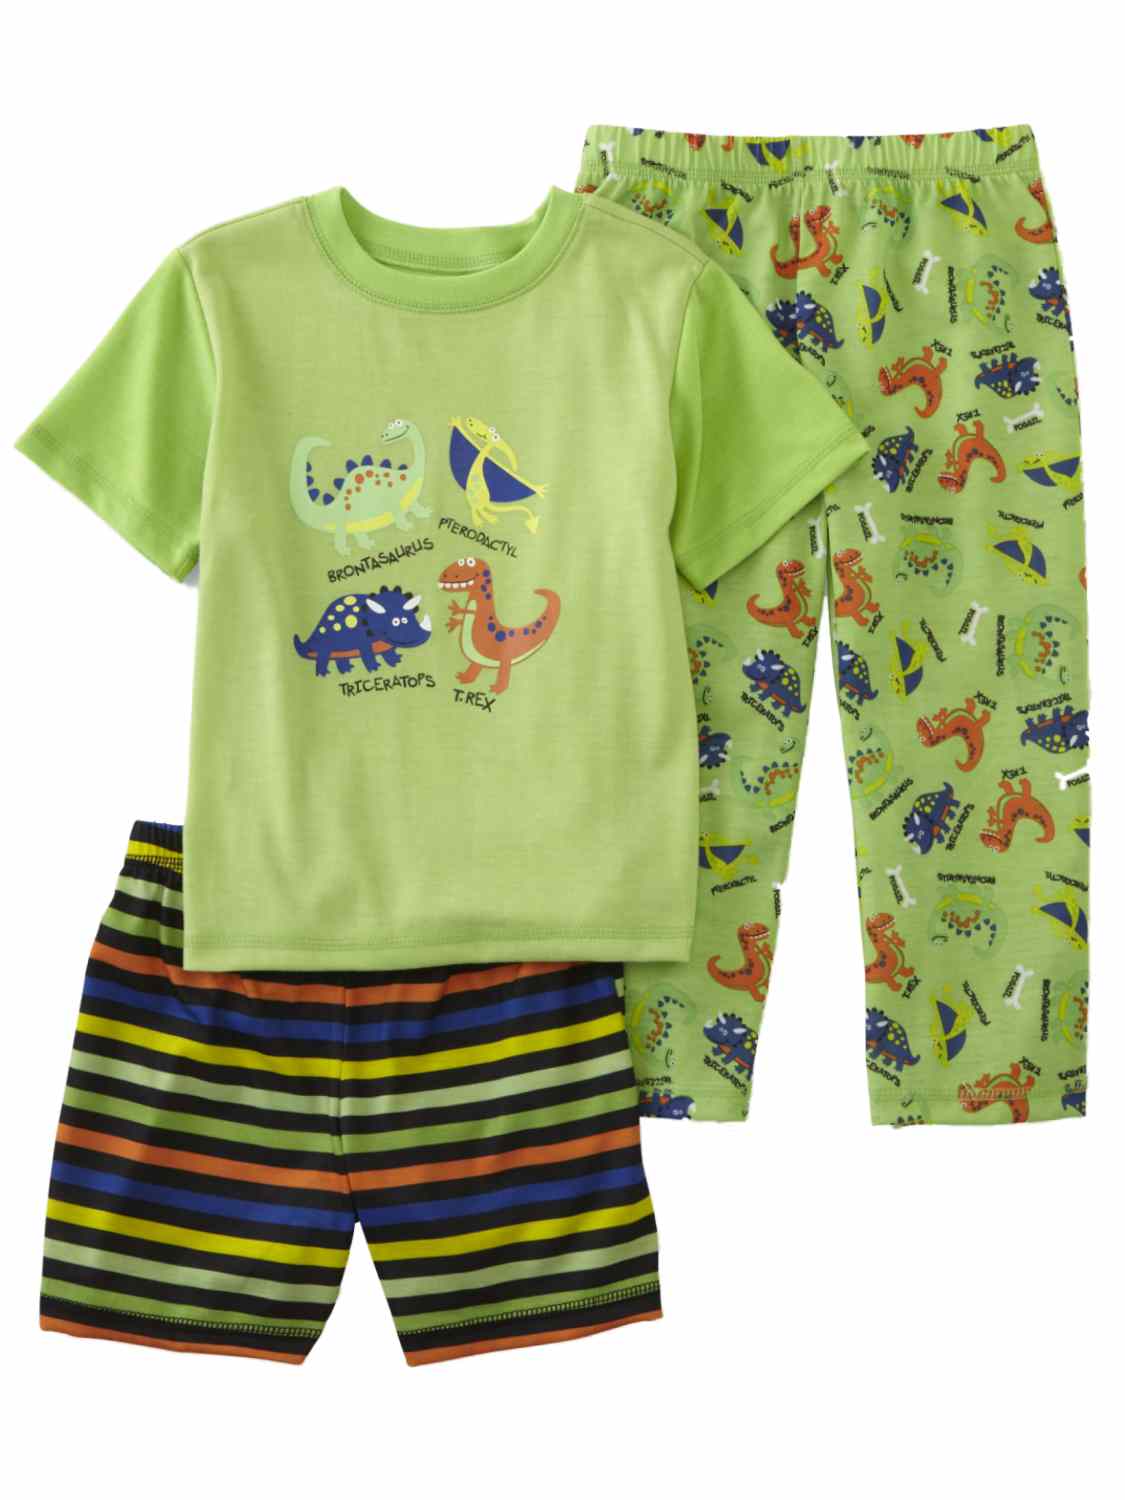 Joe Boxer Infant & Toddler Boys Green Dinosaurs Pajamas 3 Piece Sleep Set 12M